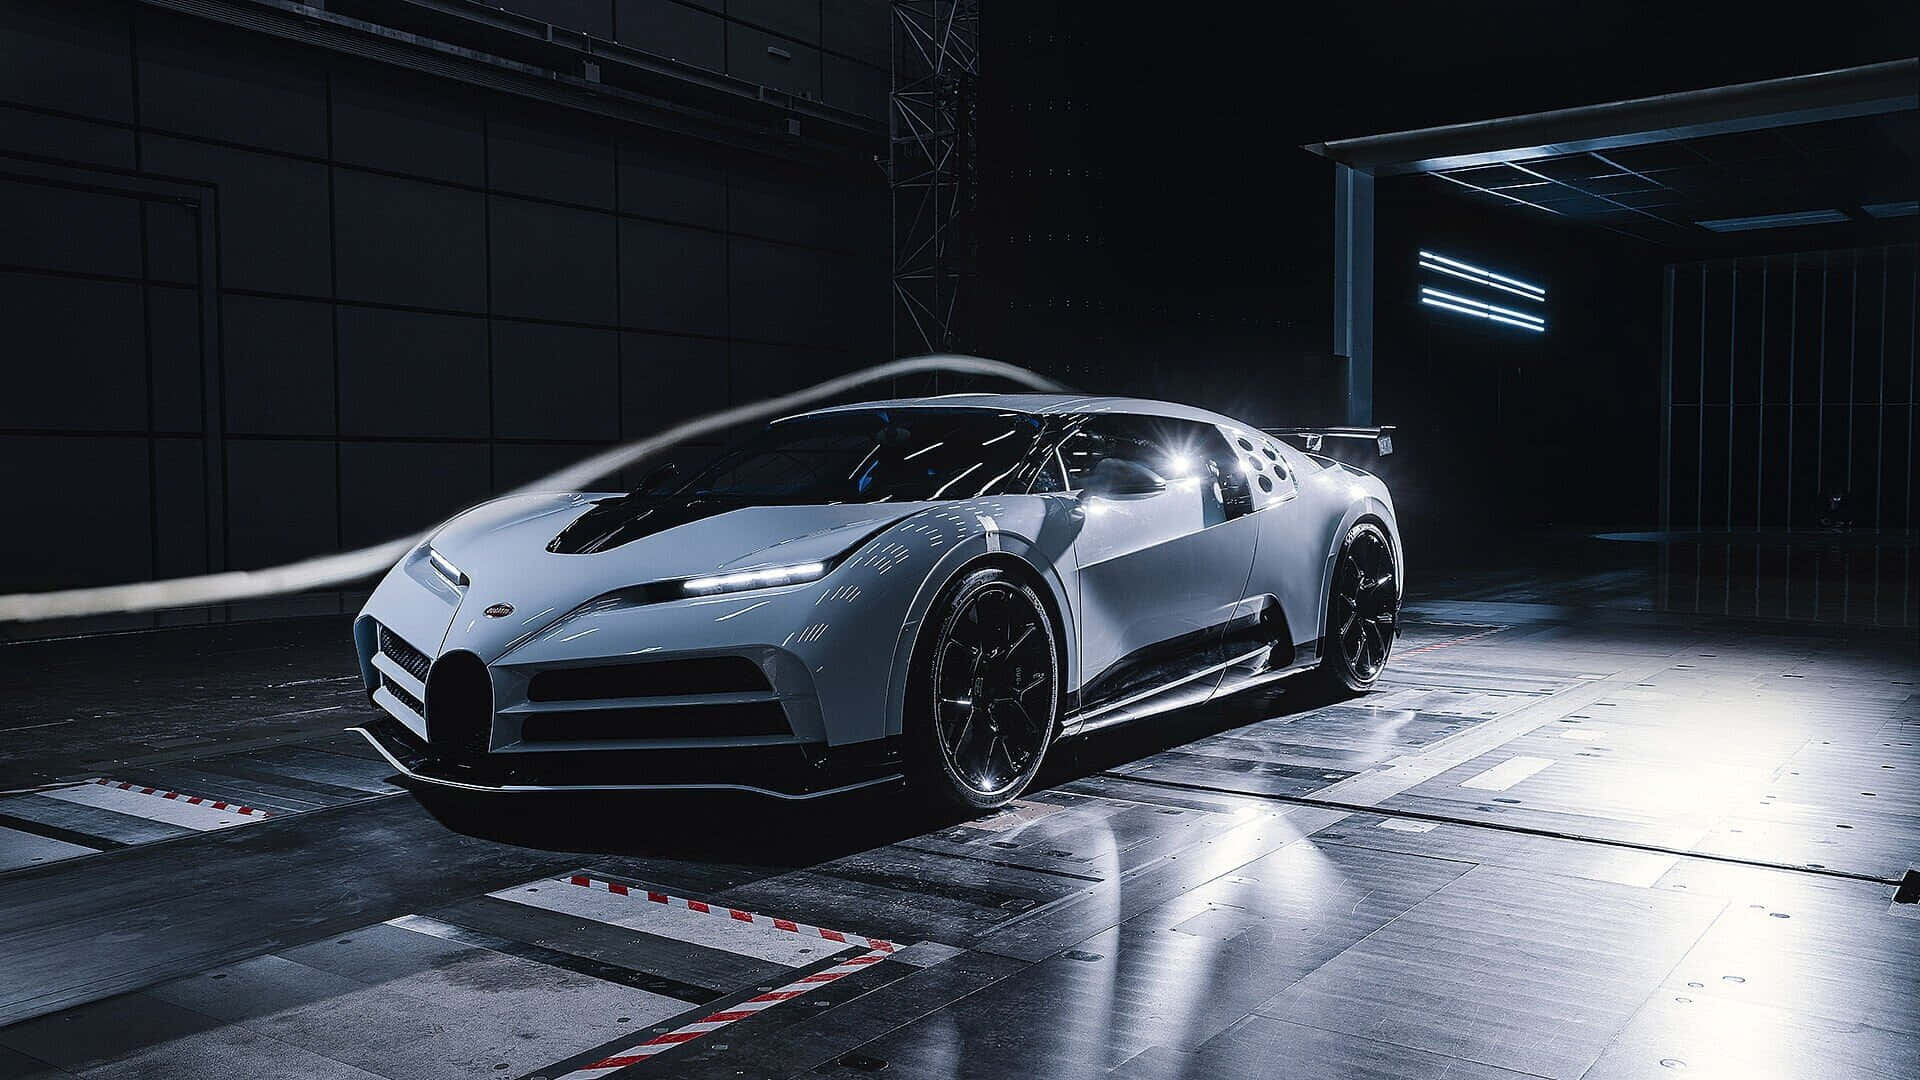 Denlegendariska Bugatti Veyron